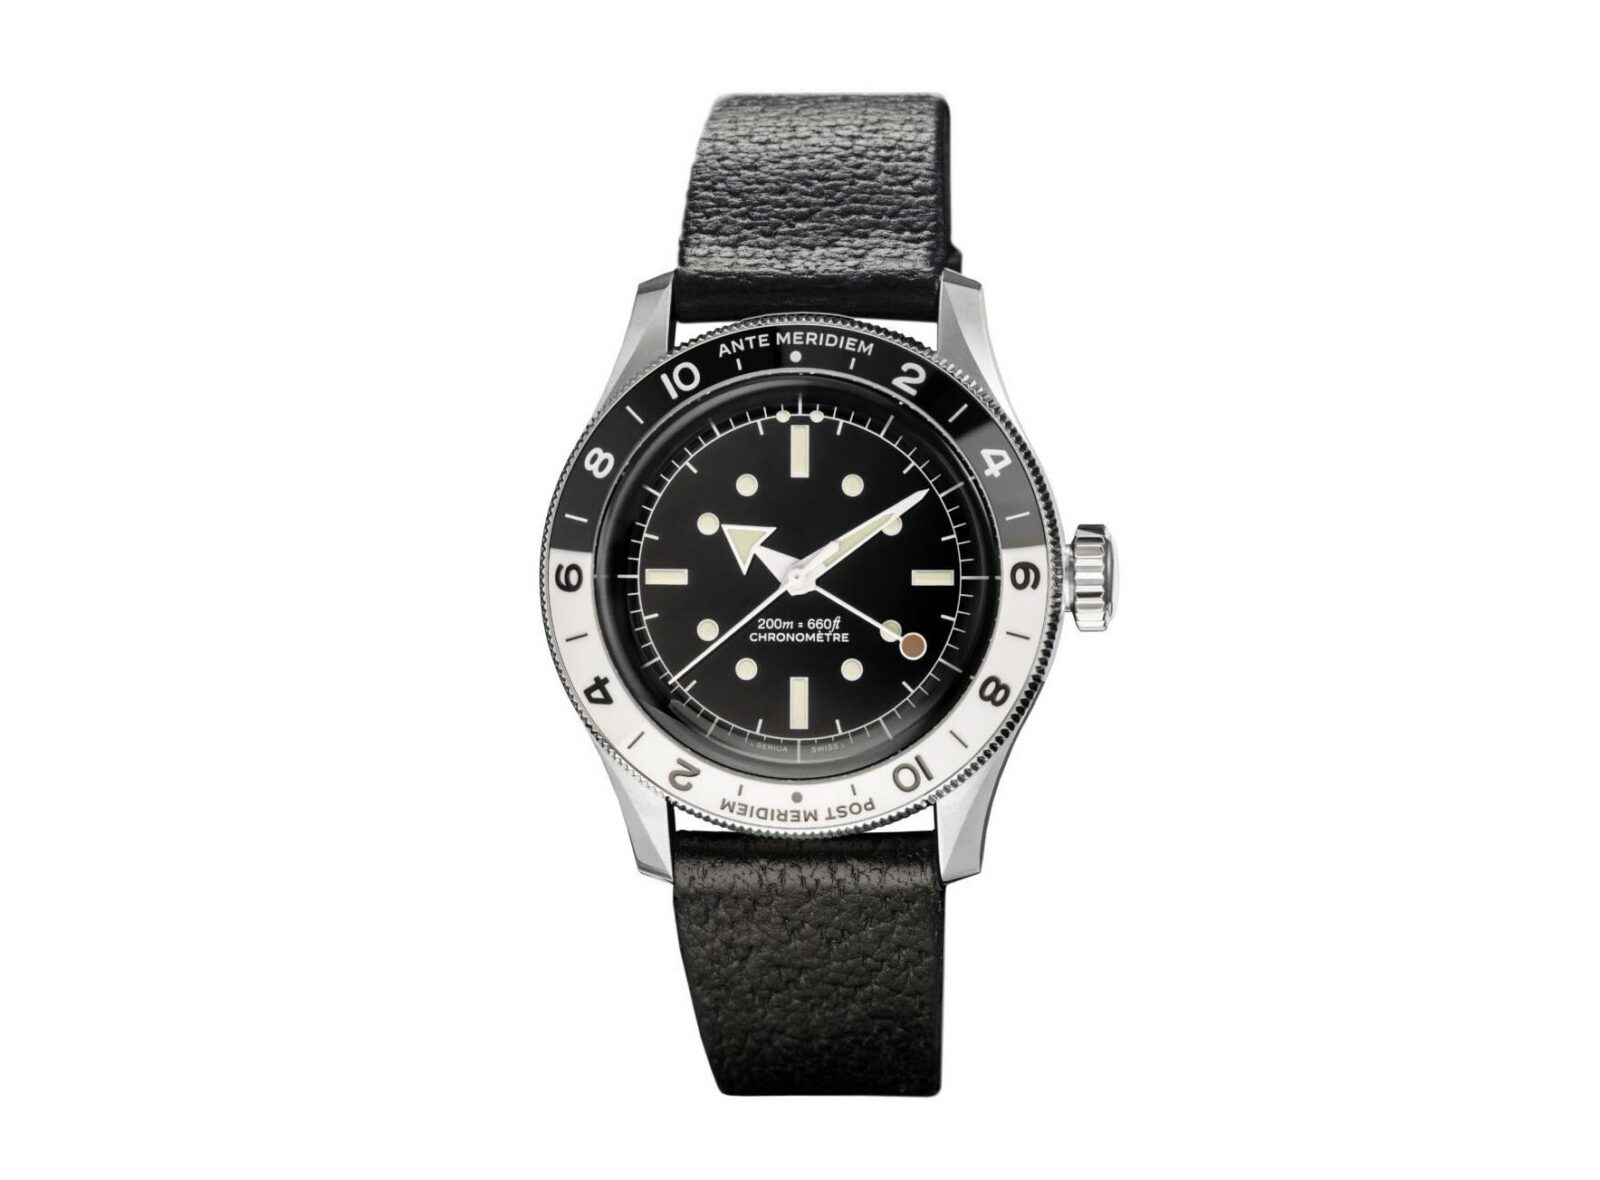 Serica GMT Chronometer Watch